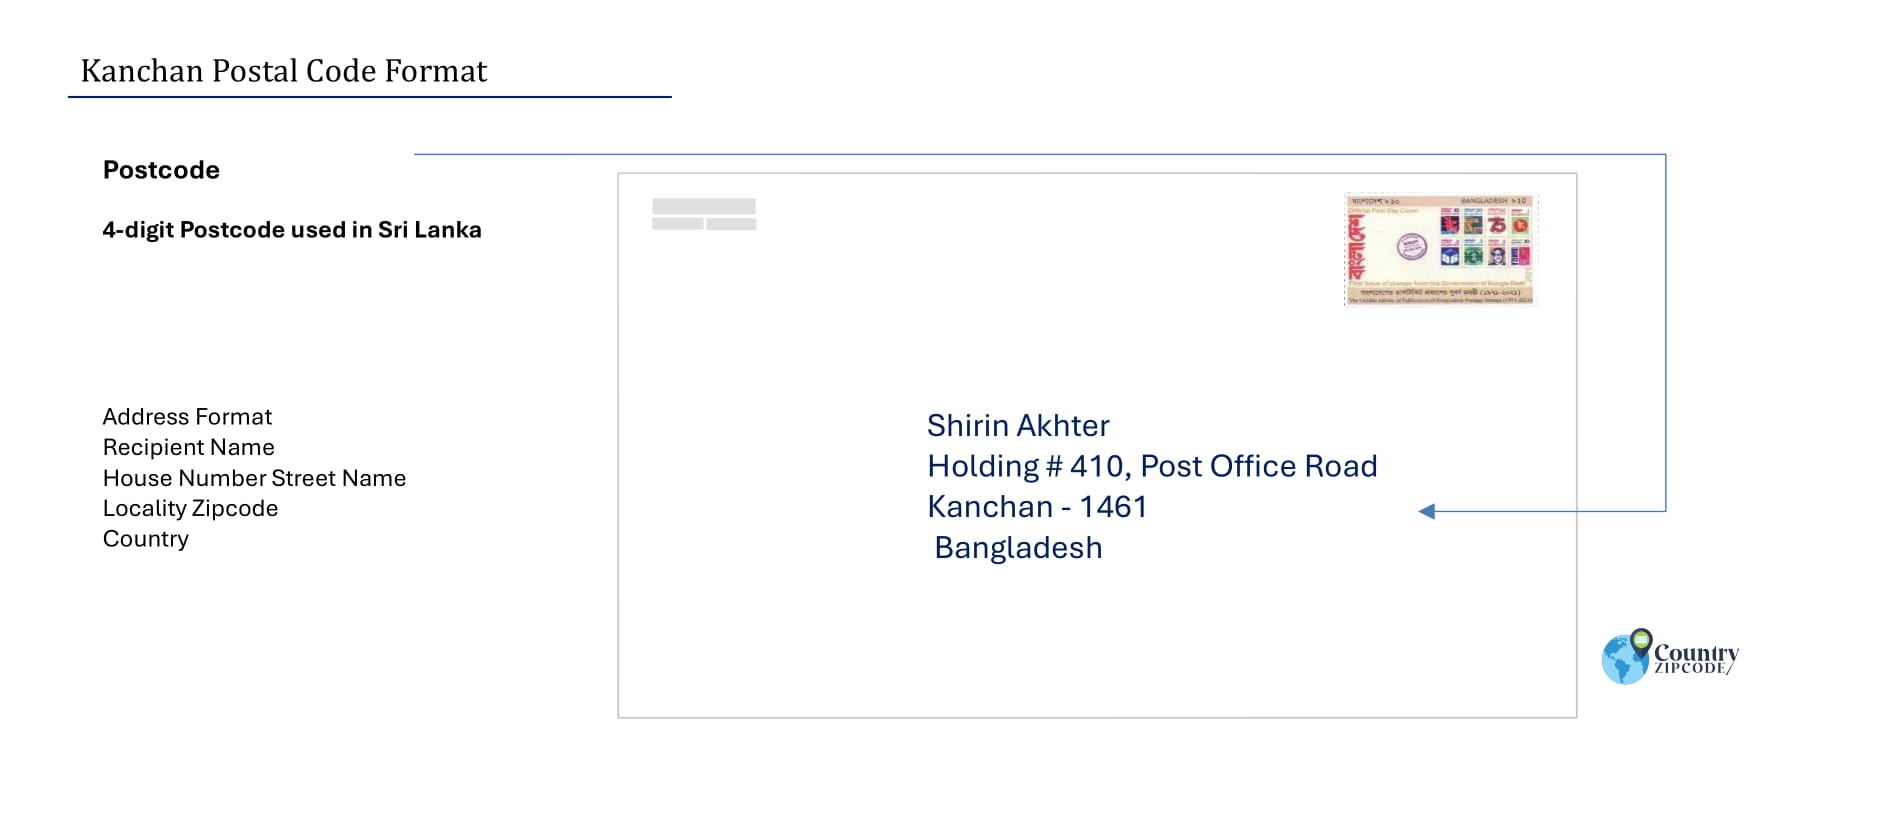 Kanchan Postal code format